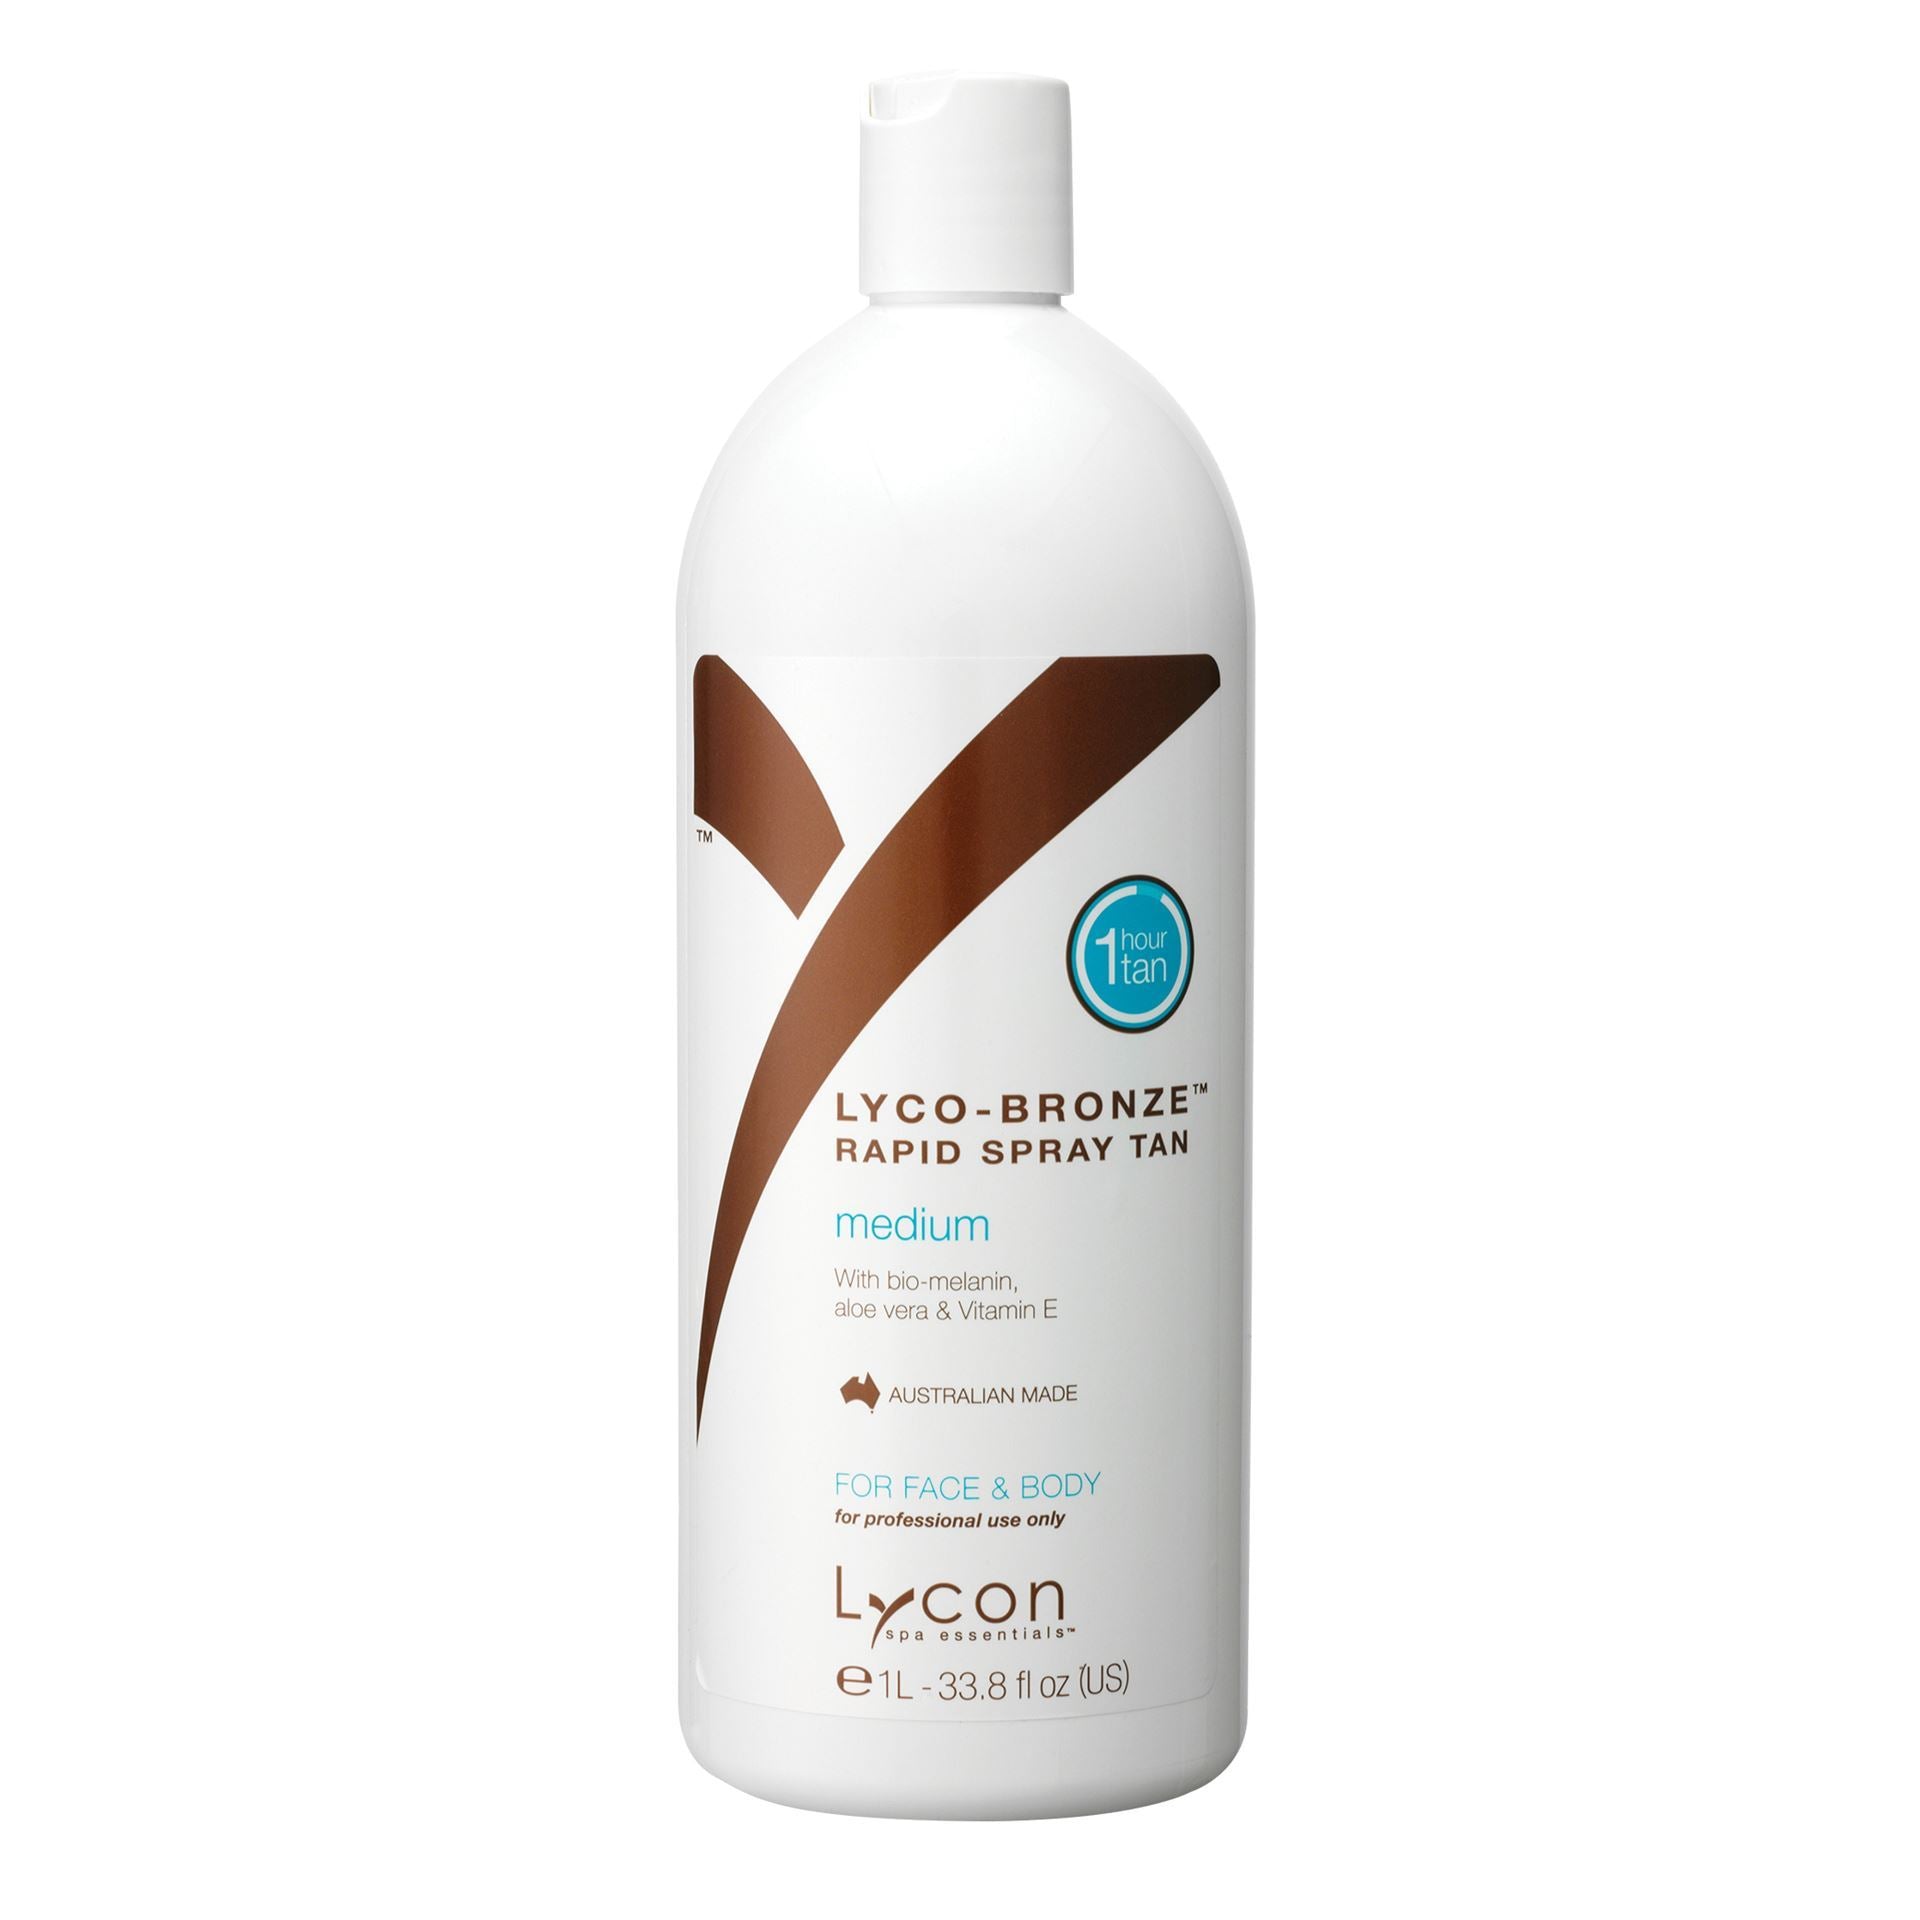 Lyco-Bronze Rapid Spray Tan